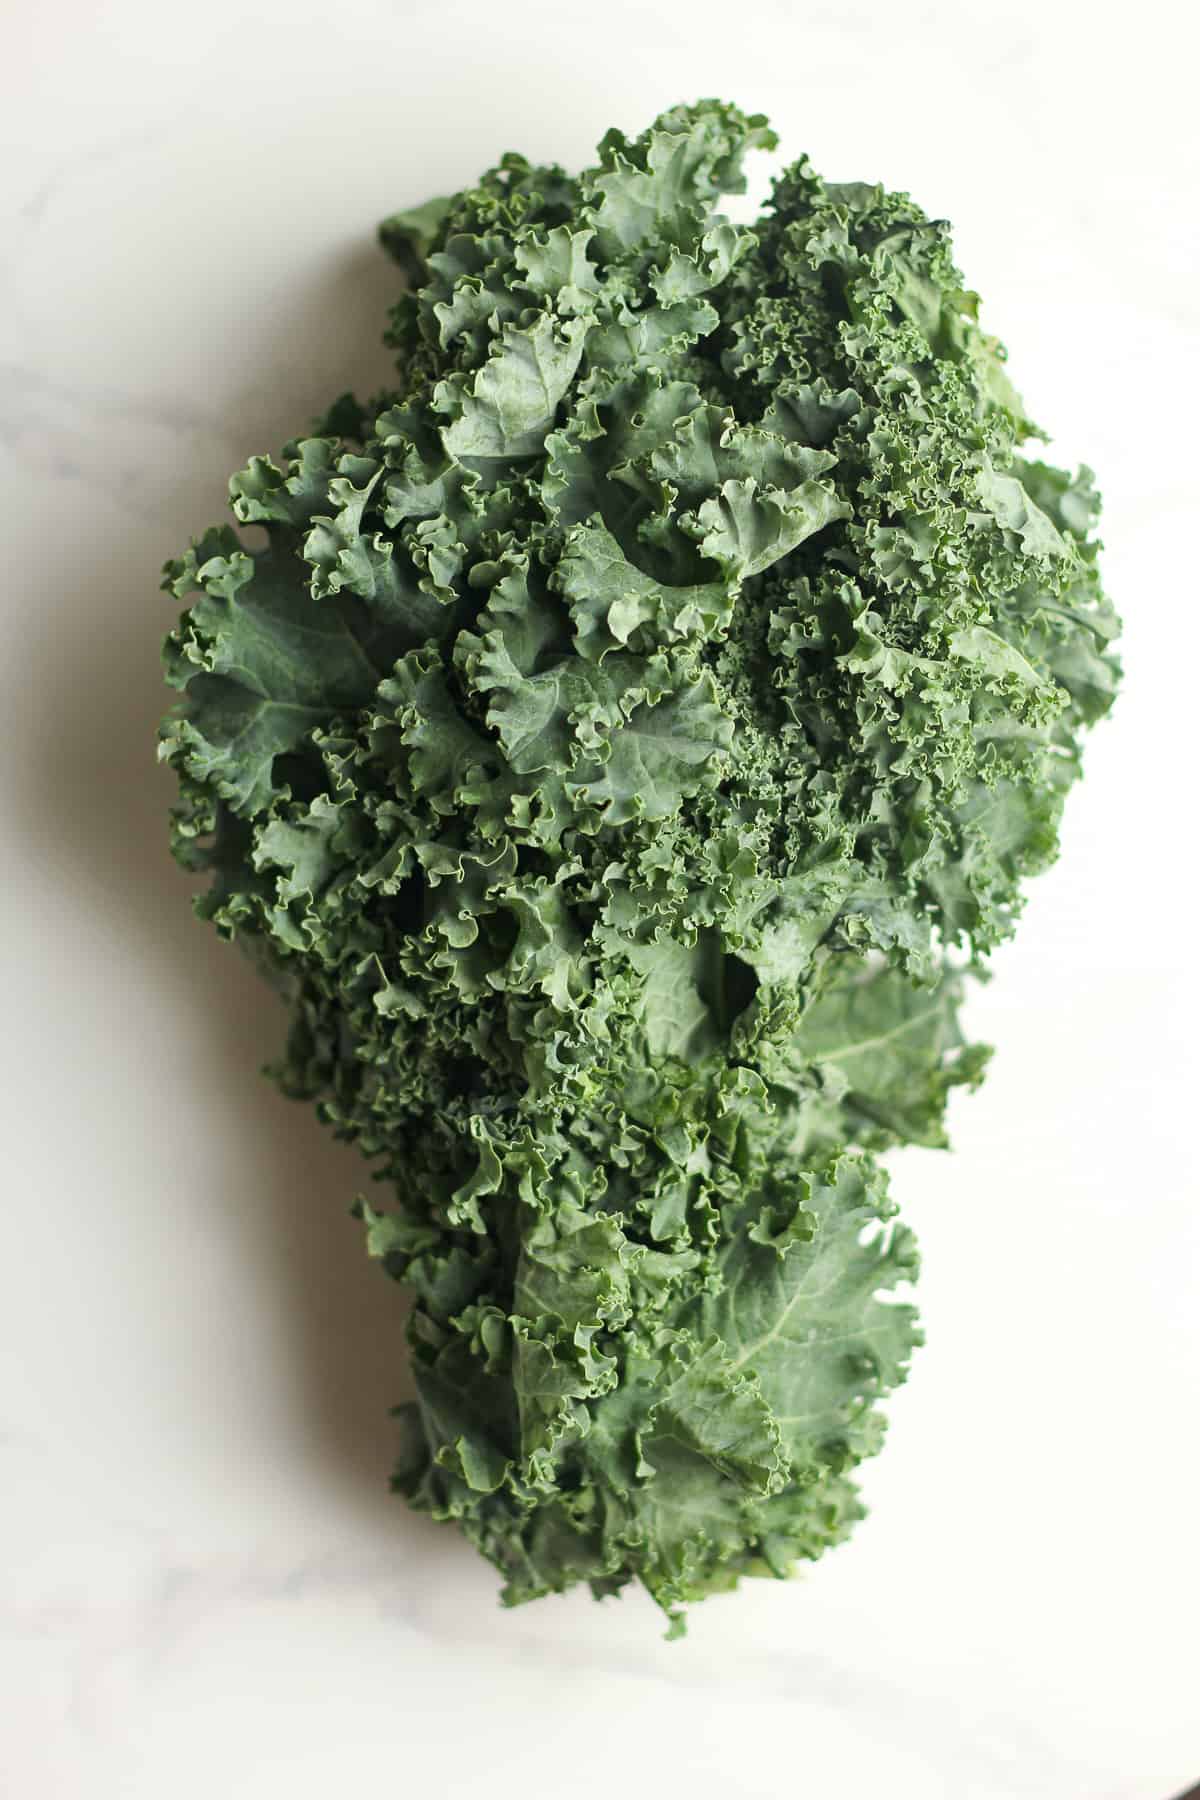 A bundle of kale.